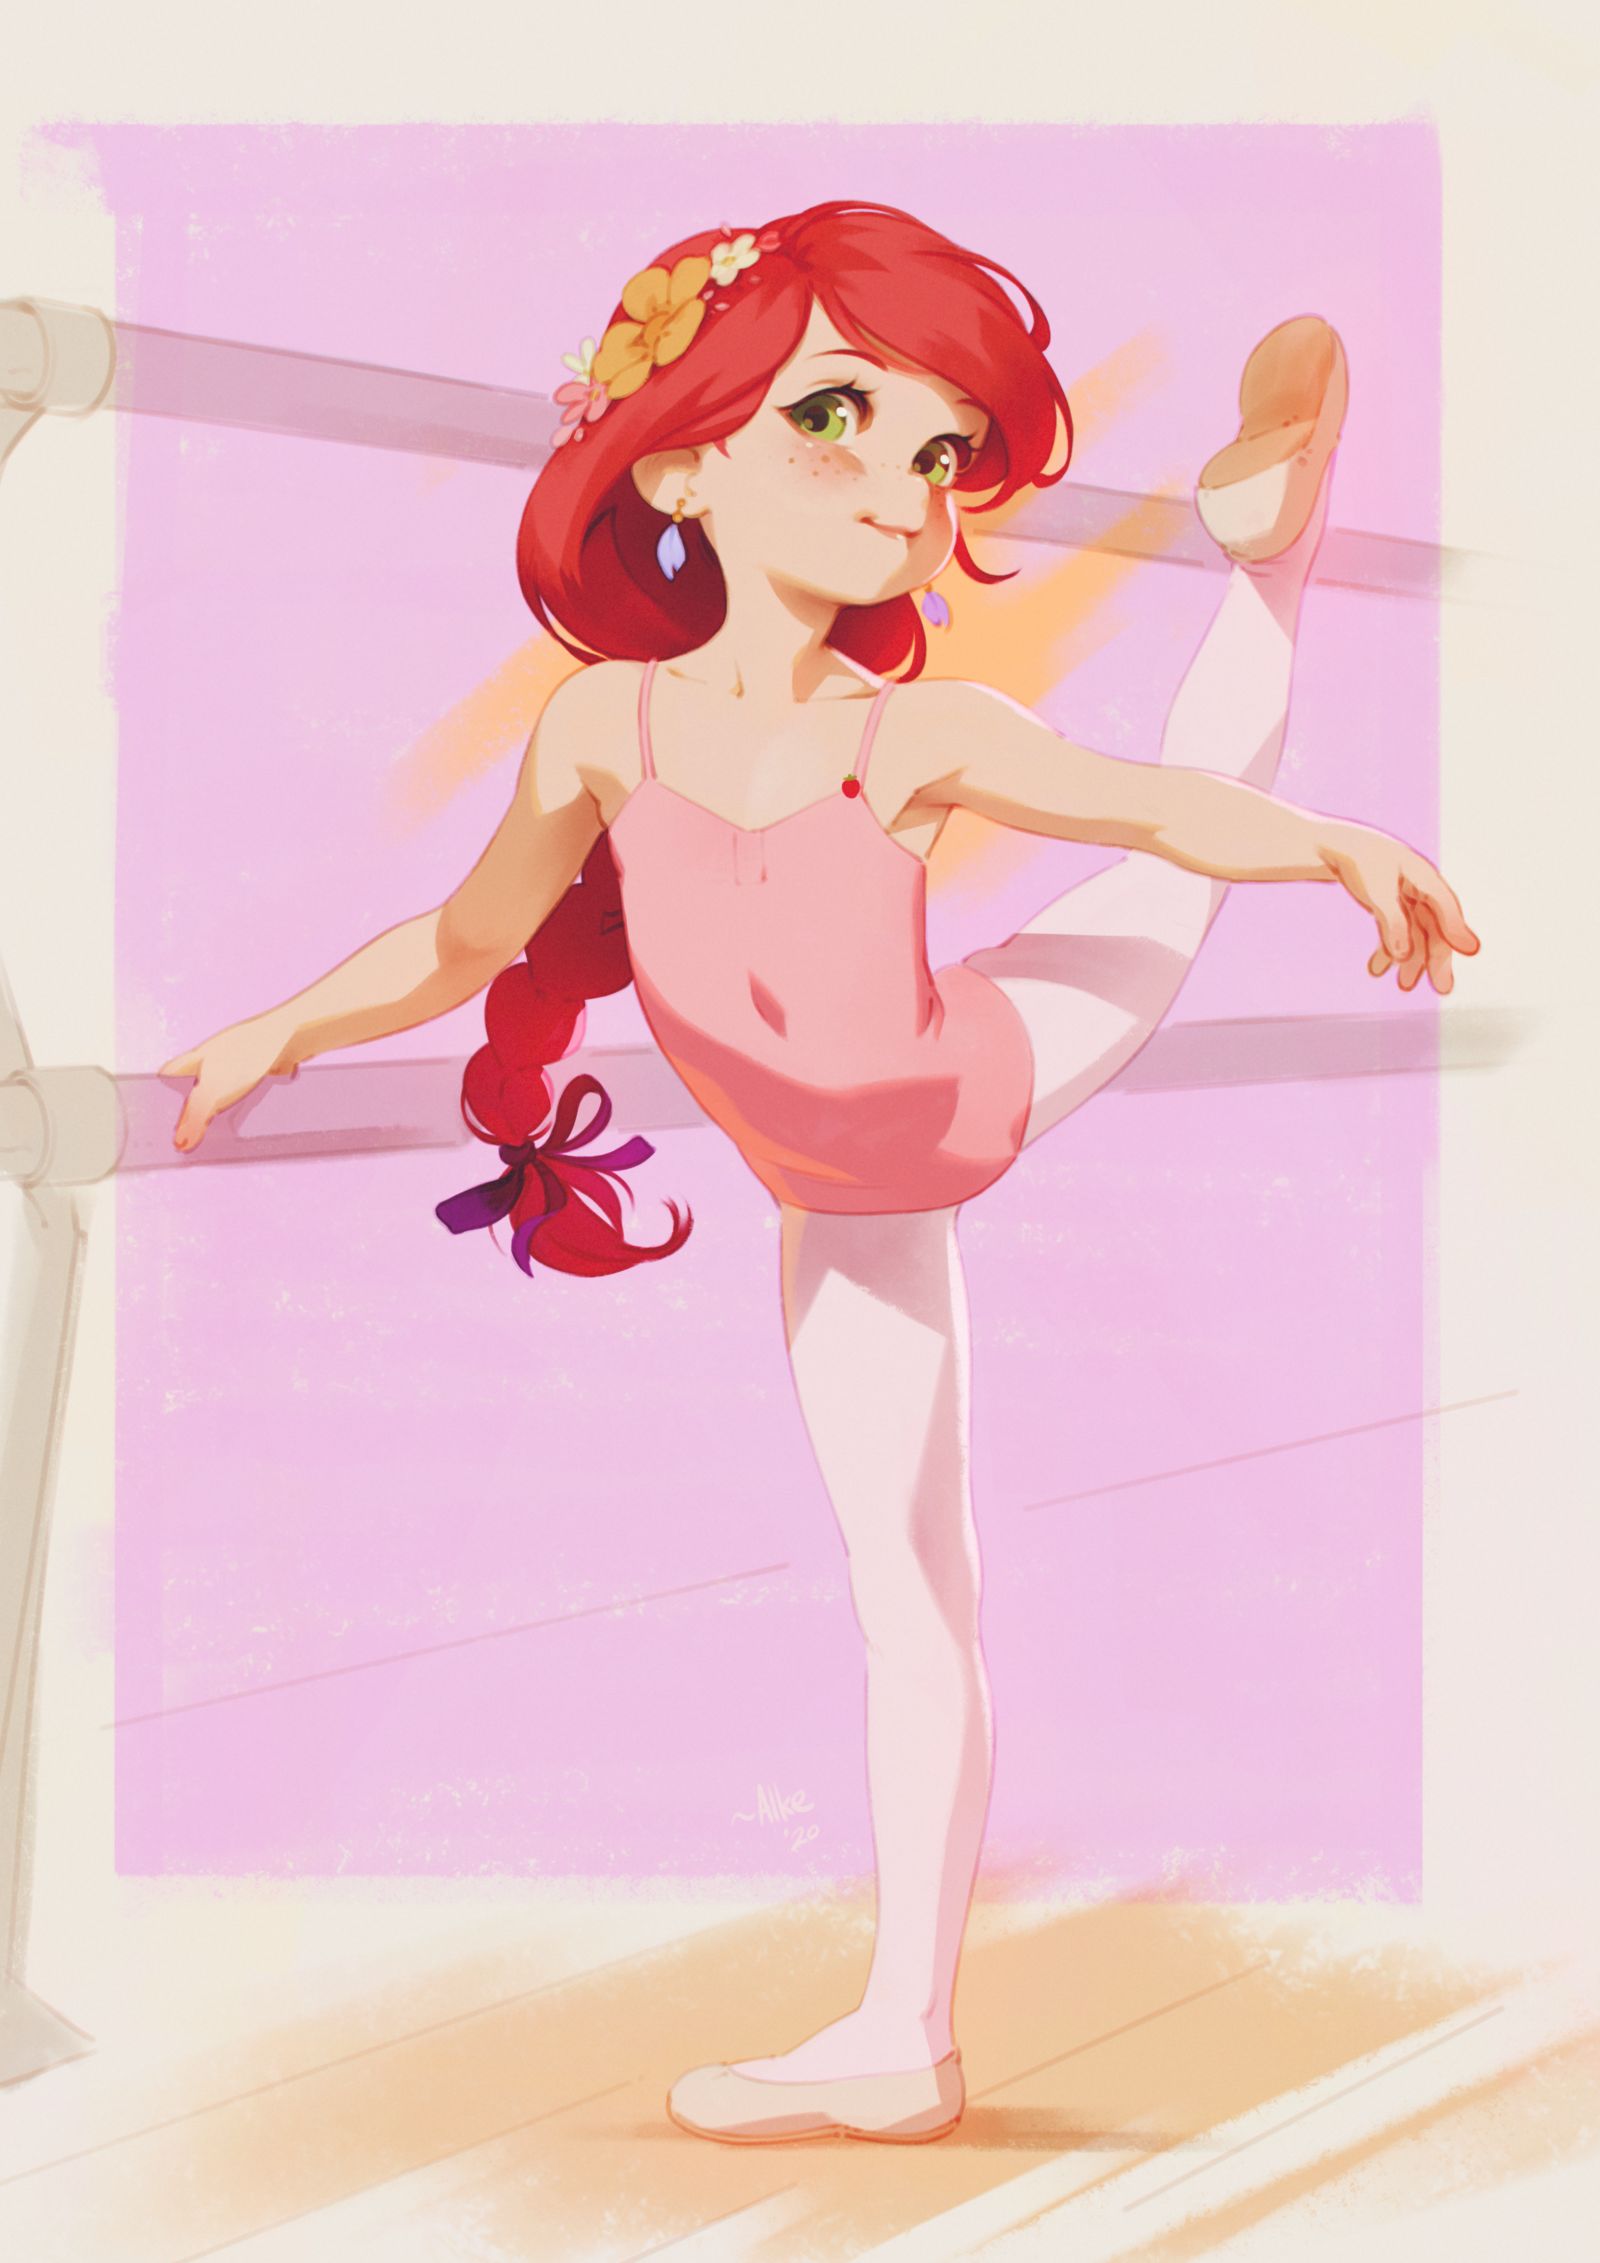 Strawberry Shortcake ballerina